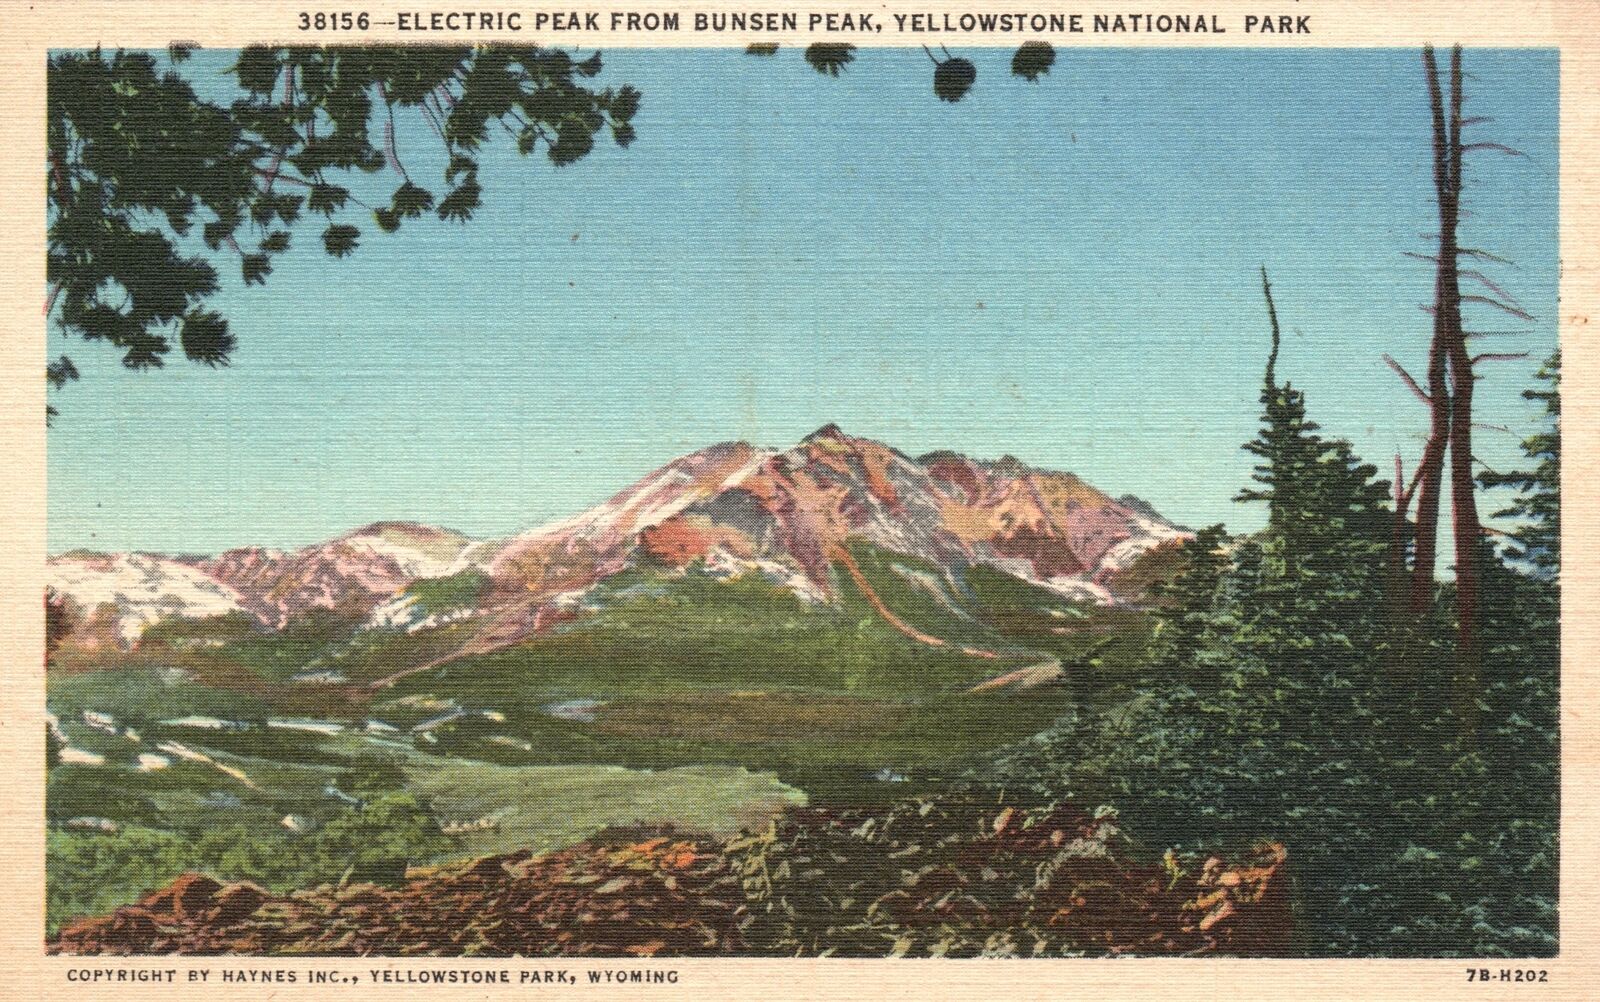 Vintage Postcard 1948 Electric Peak From Bunsen Peak Yellowstone Nat\'l Park W.Y.